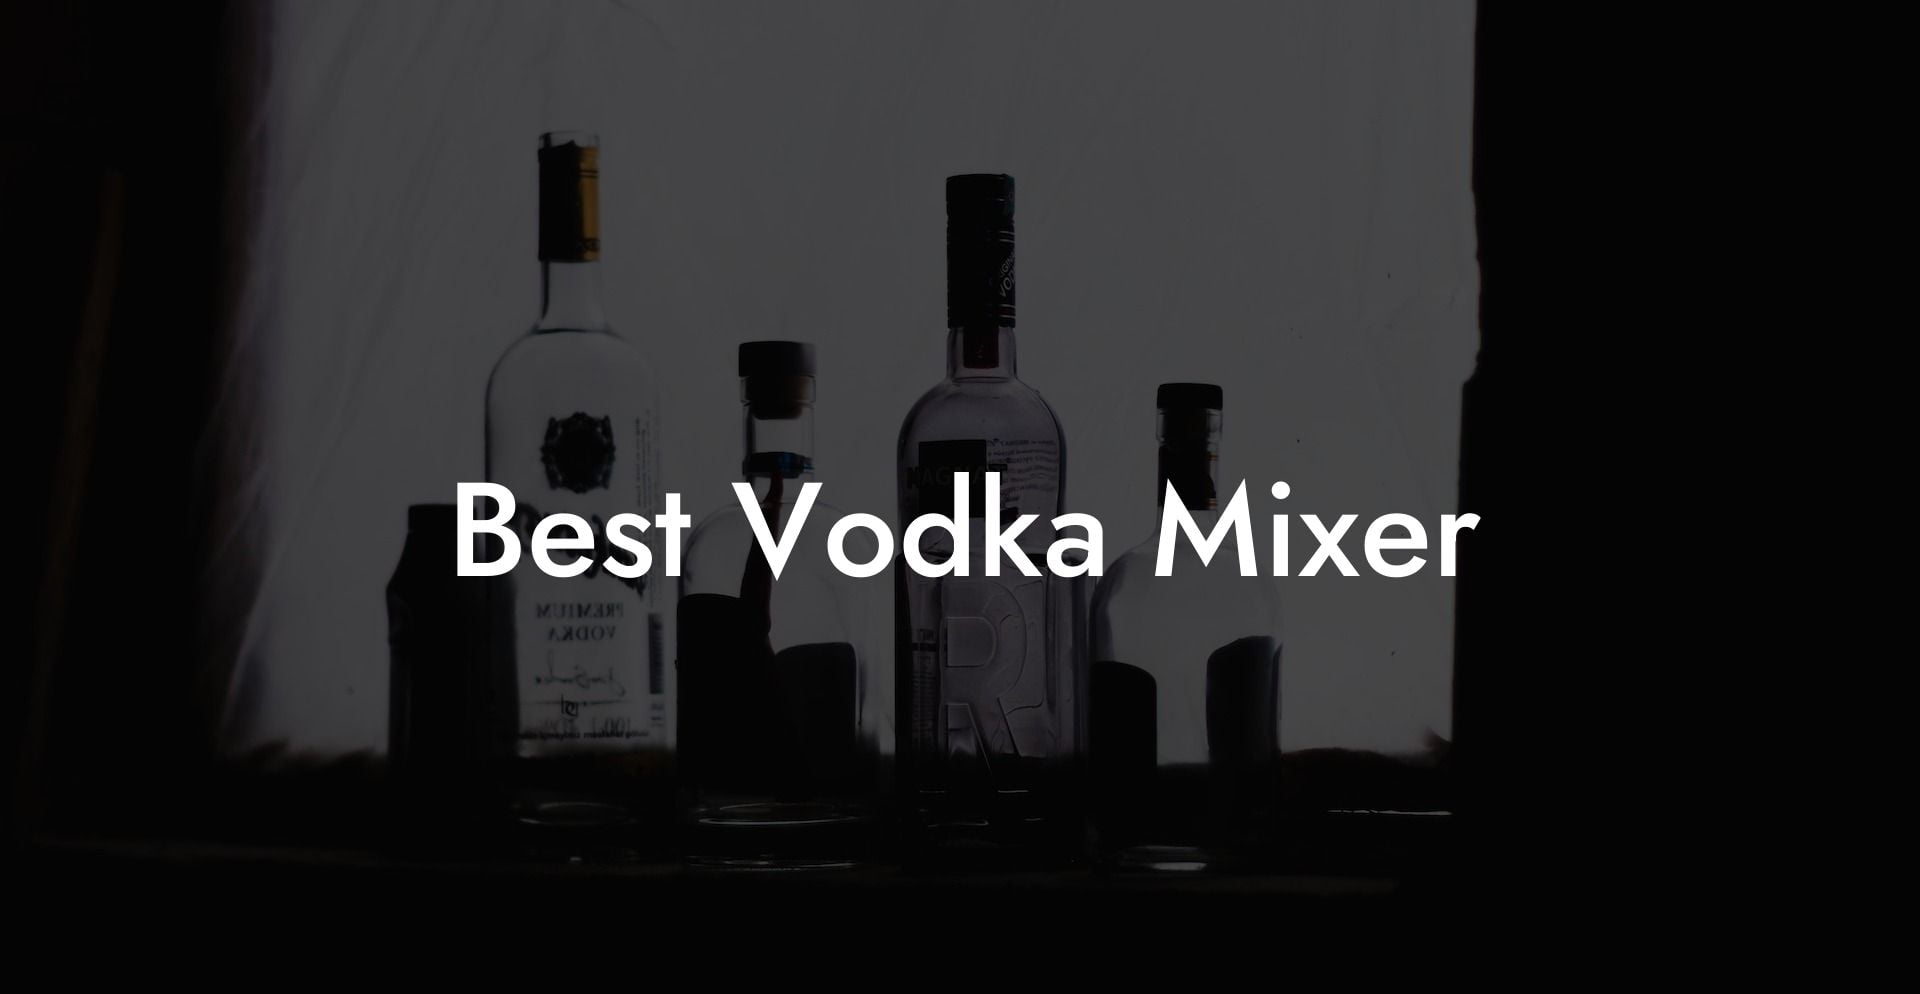 Best Vodka Mixer